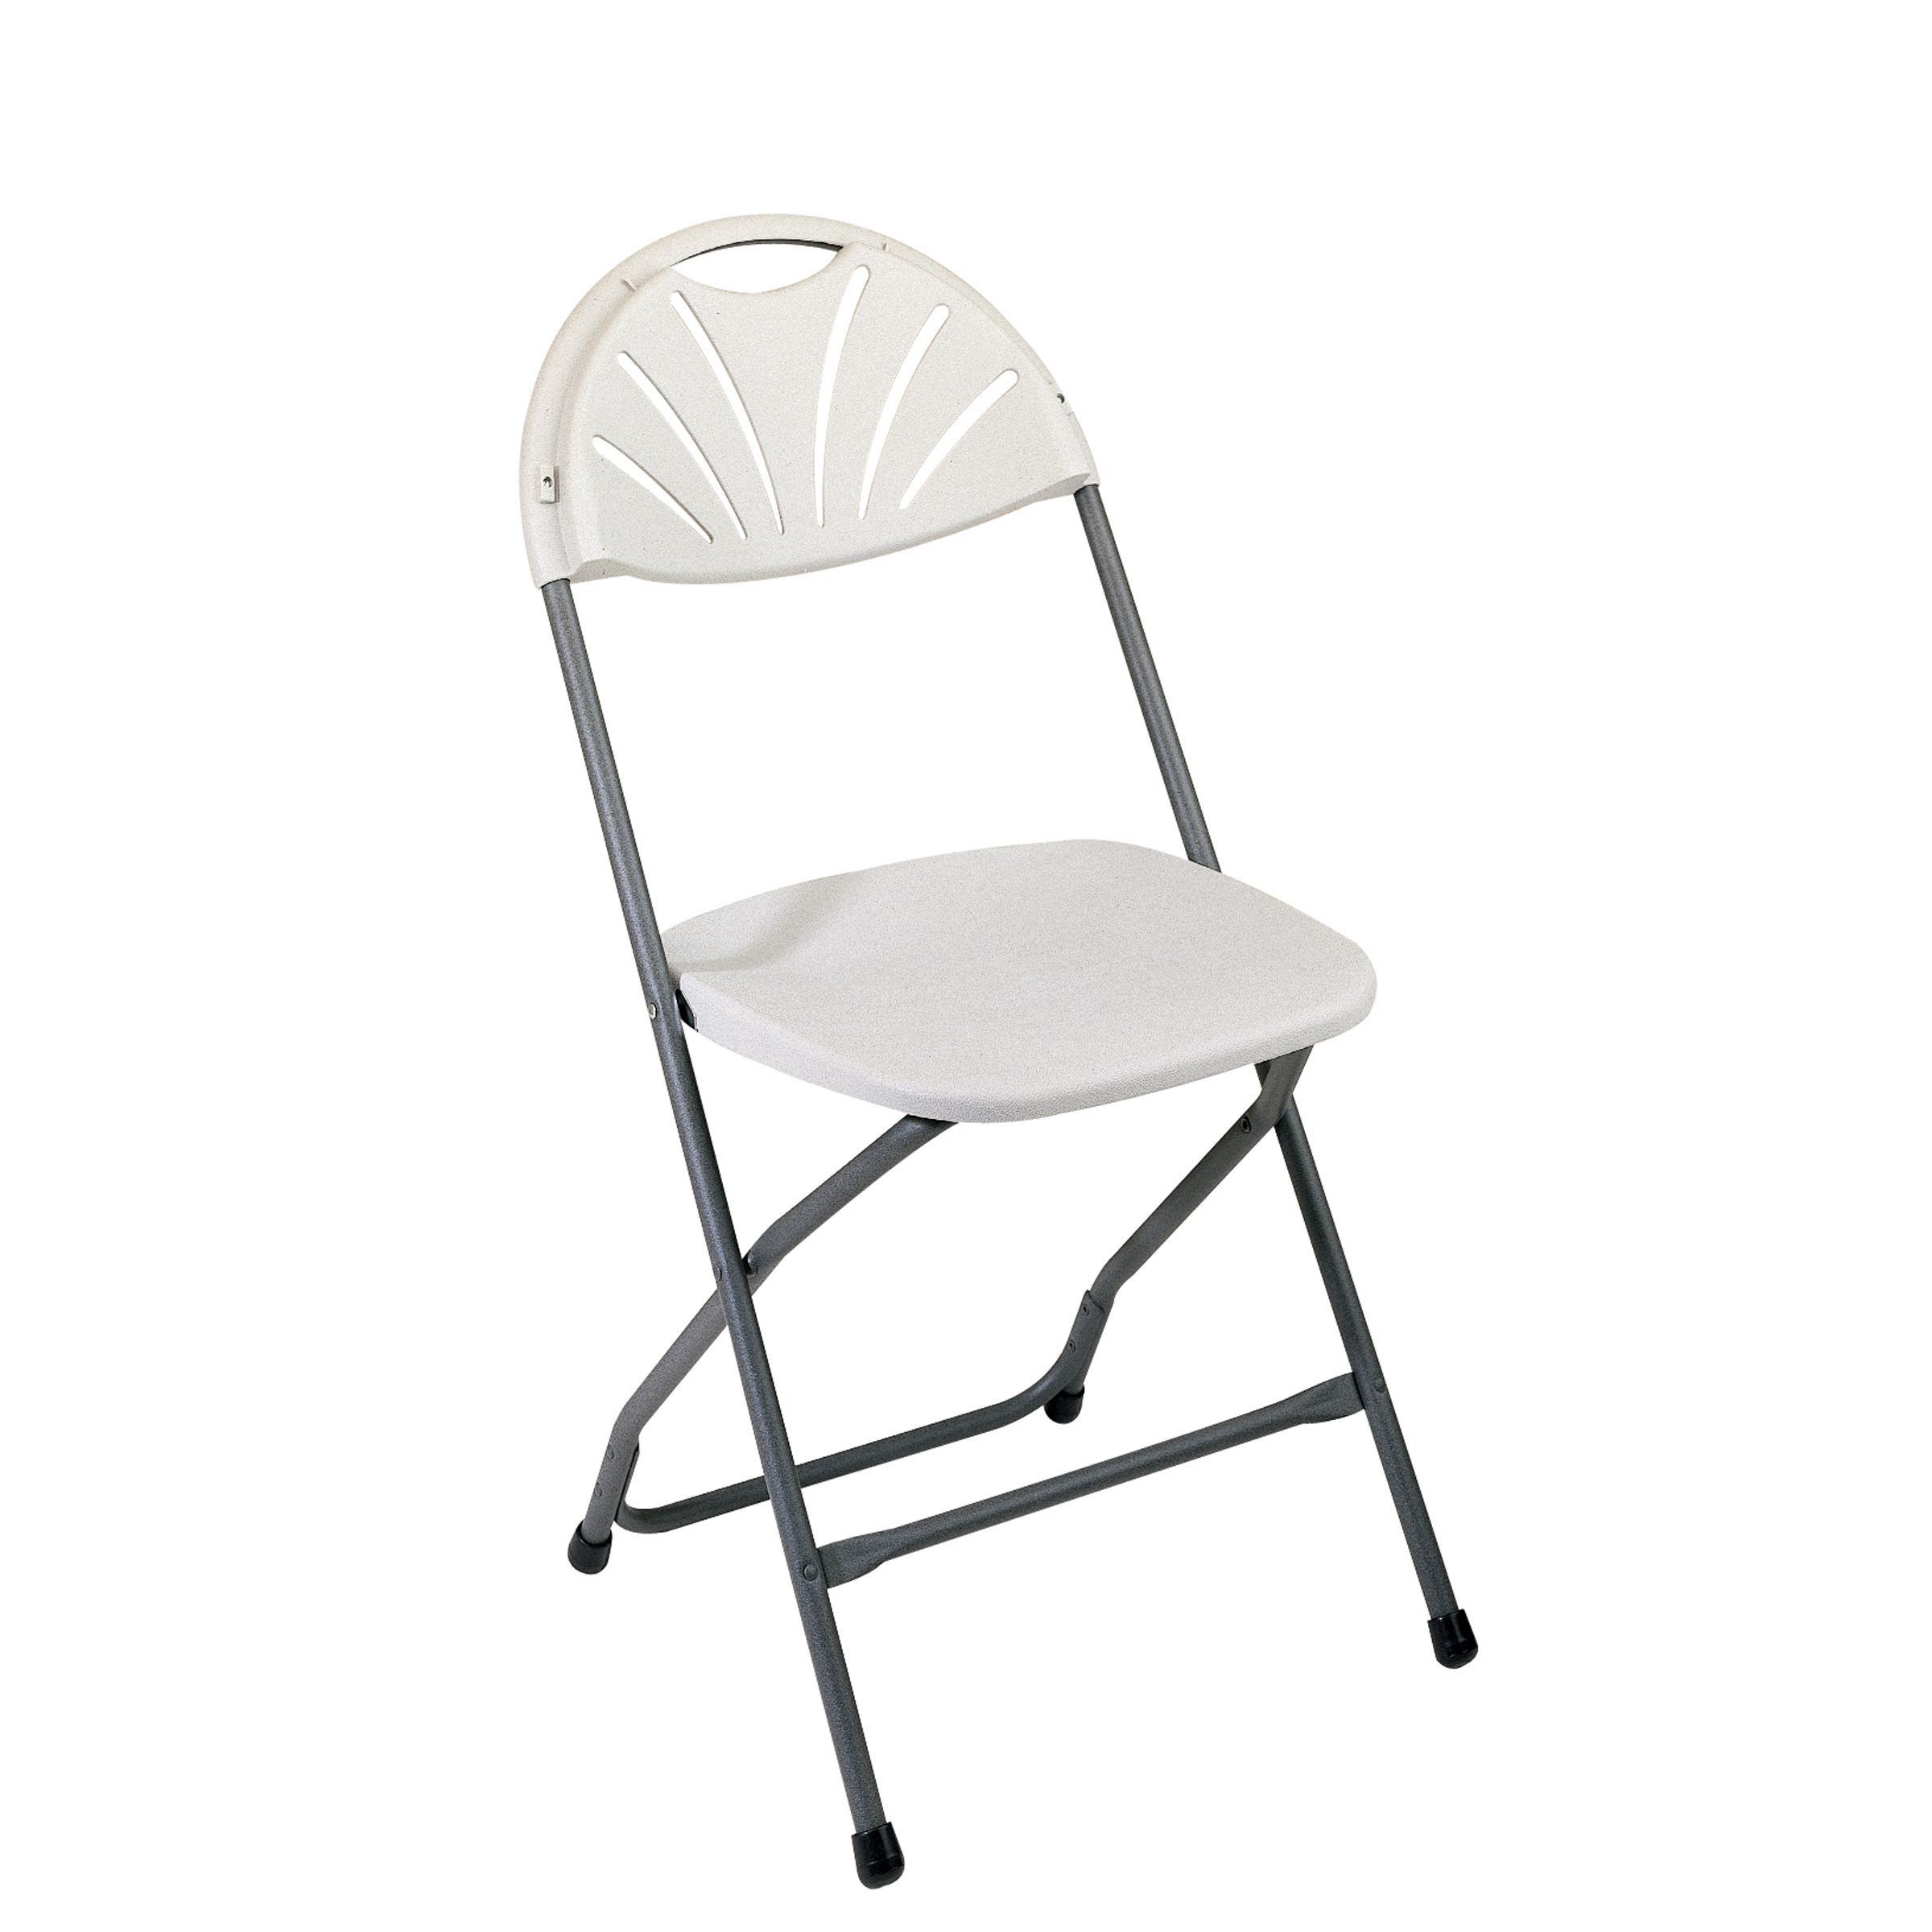 OSP Designs Plastic Folding Chair Set of 4 - Resin